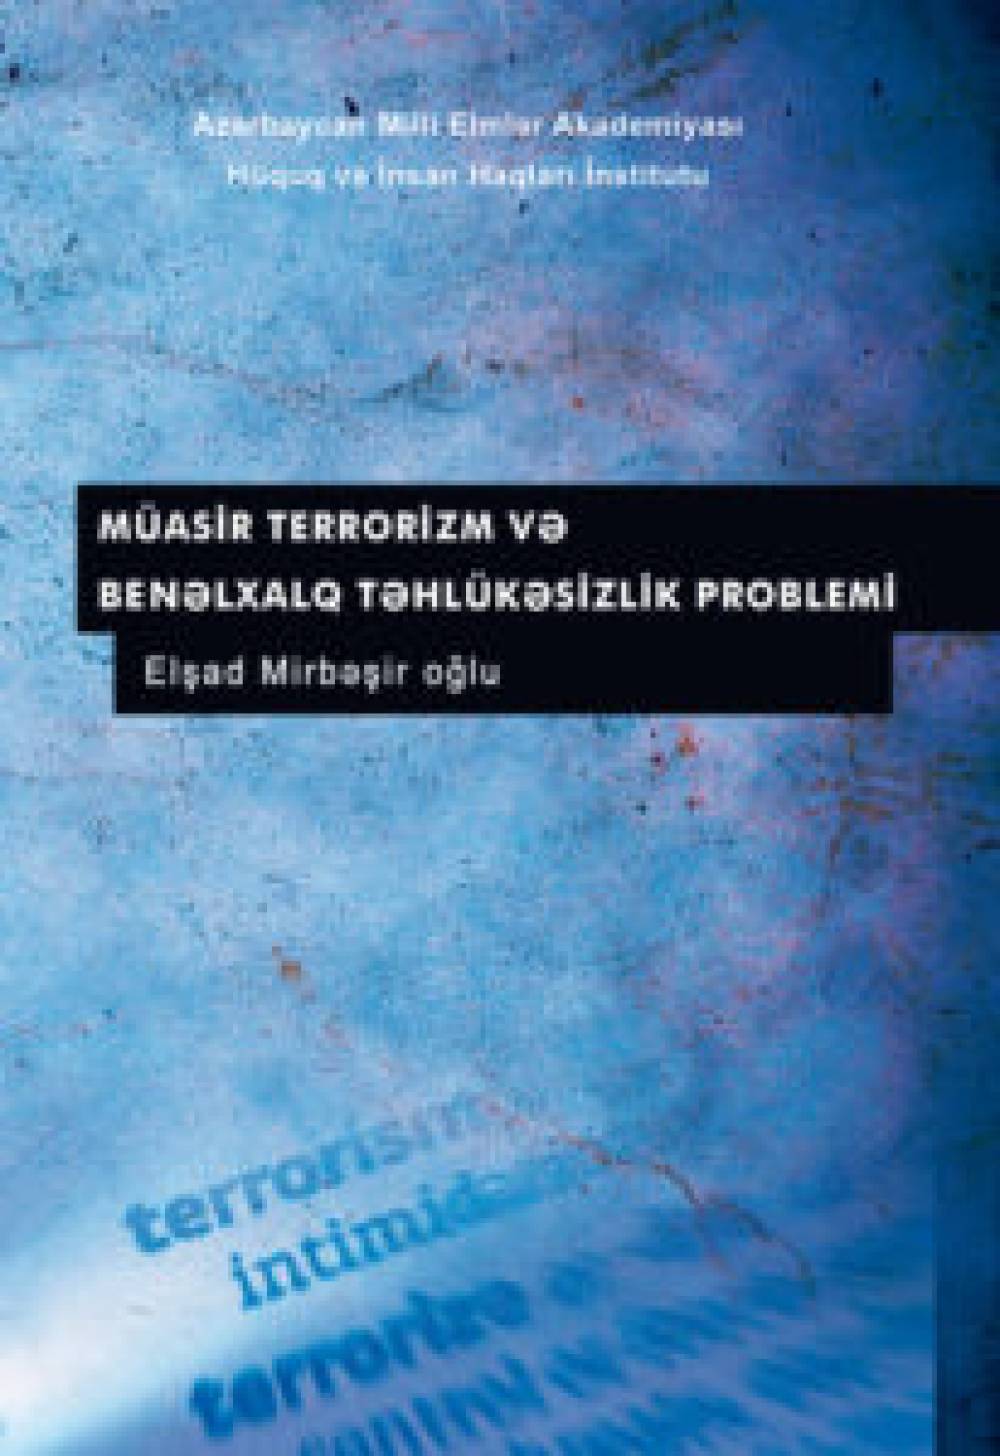 Elshad Mirbeshir oglu: Modern terrorism and the problem of international security (monography)